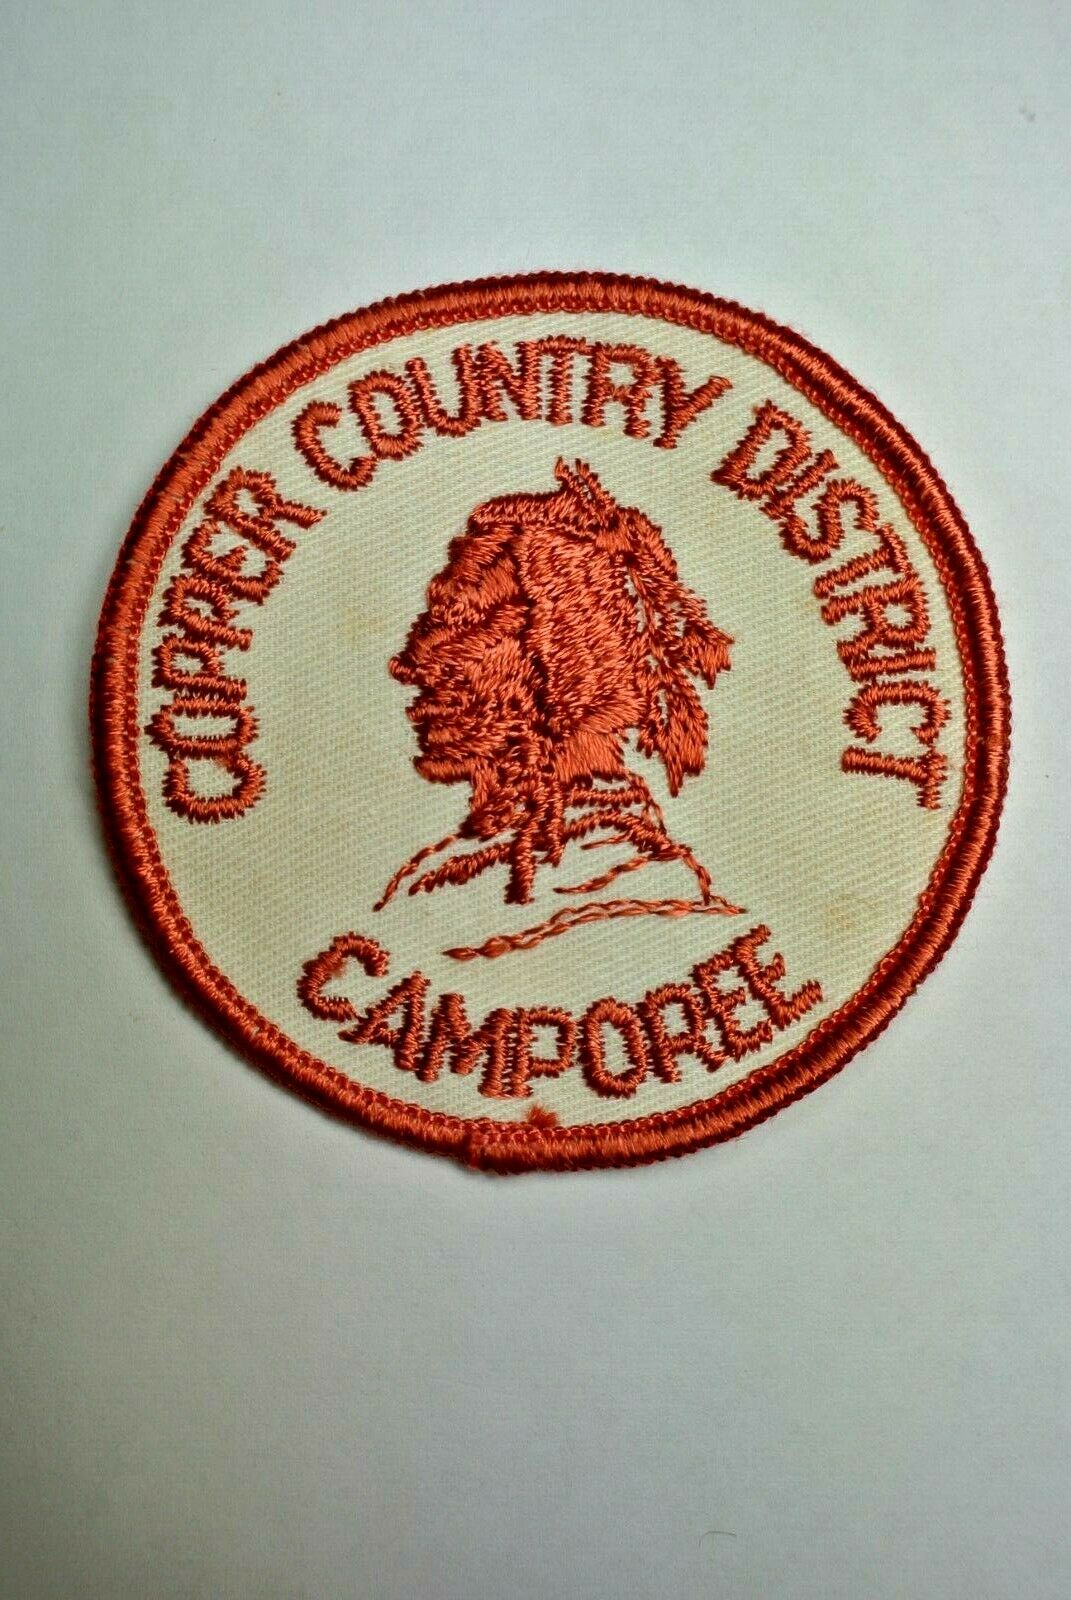 Vintage Copper Country District Camporee Pocket Patch - Boy Scouts - Bsa - Mint